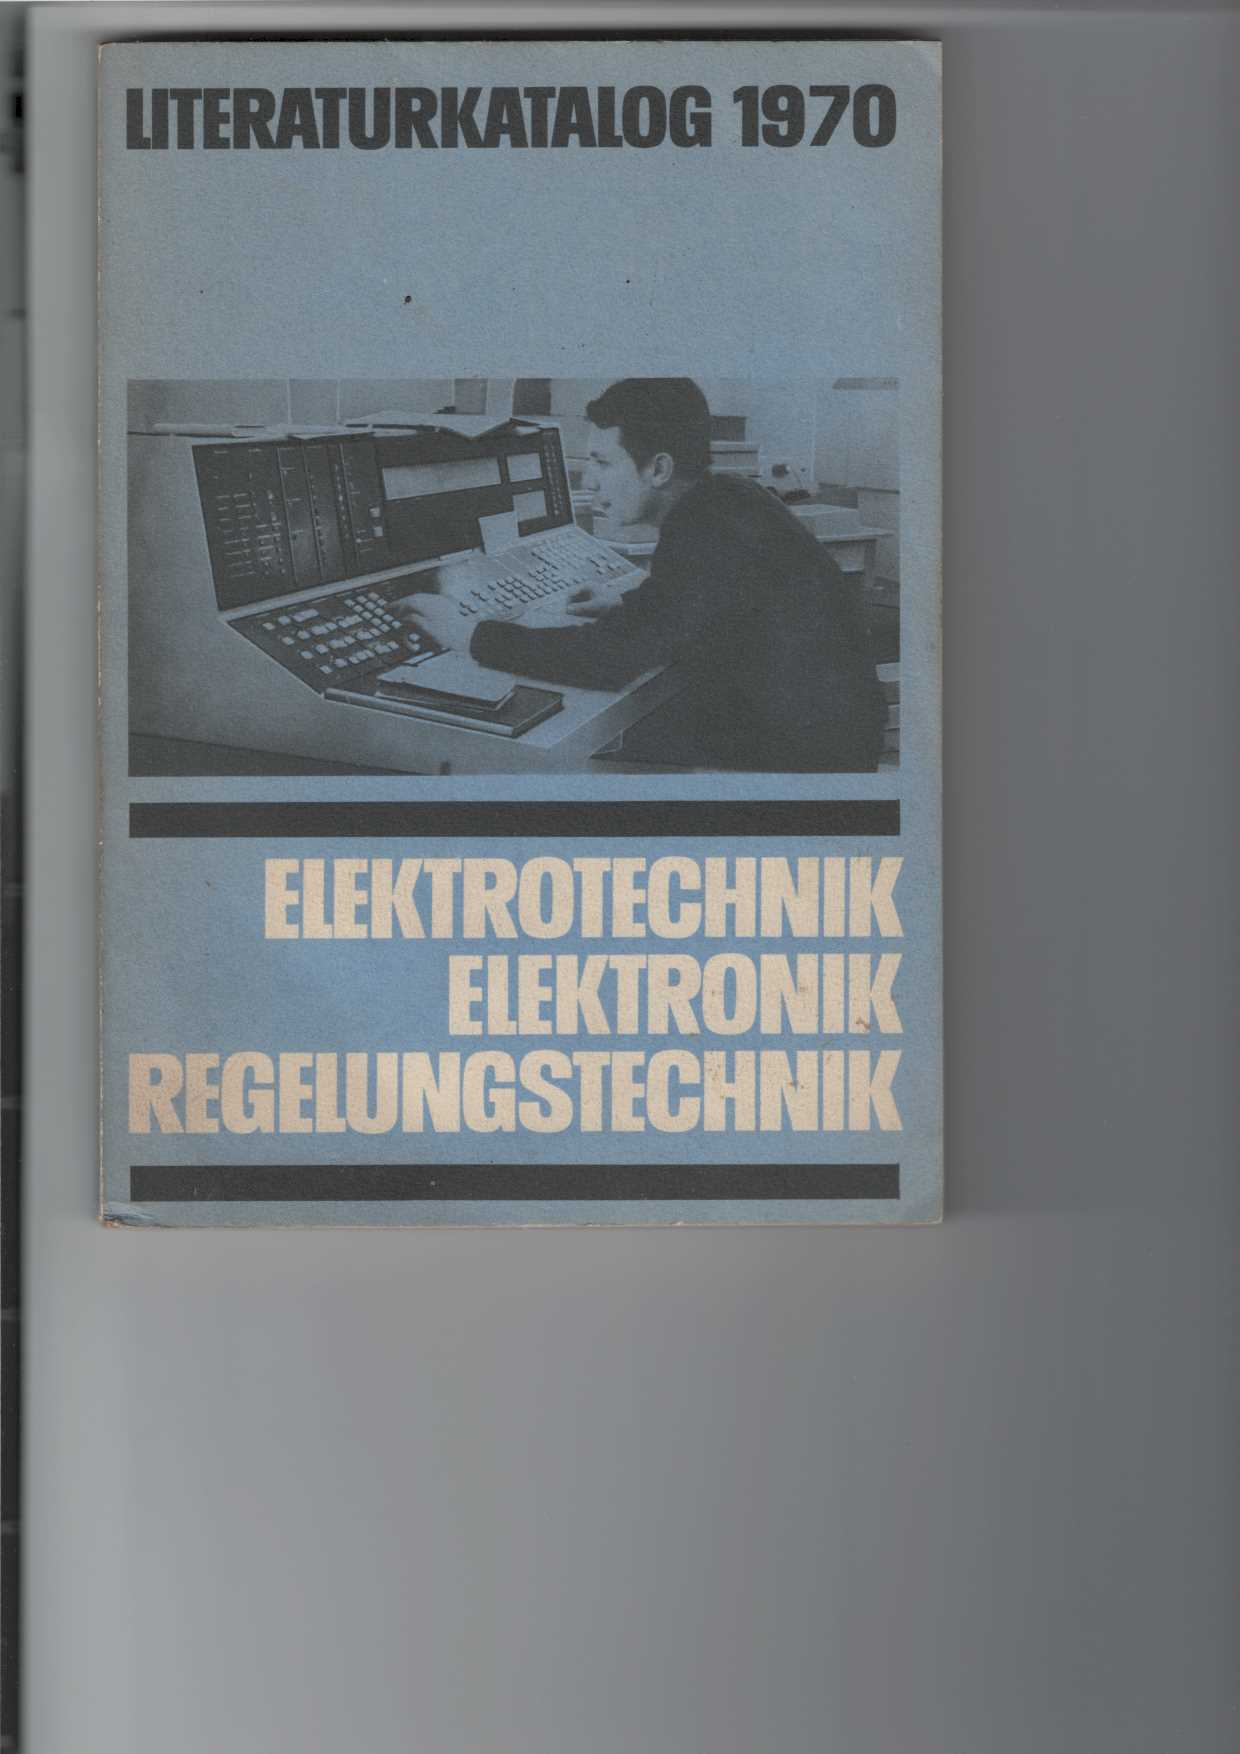   Literaturkatalog 1970 : Elektrotechnik, Elektronik, Regelungstechnik. 